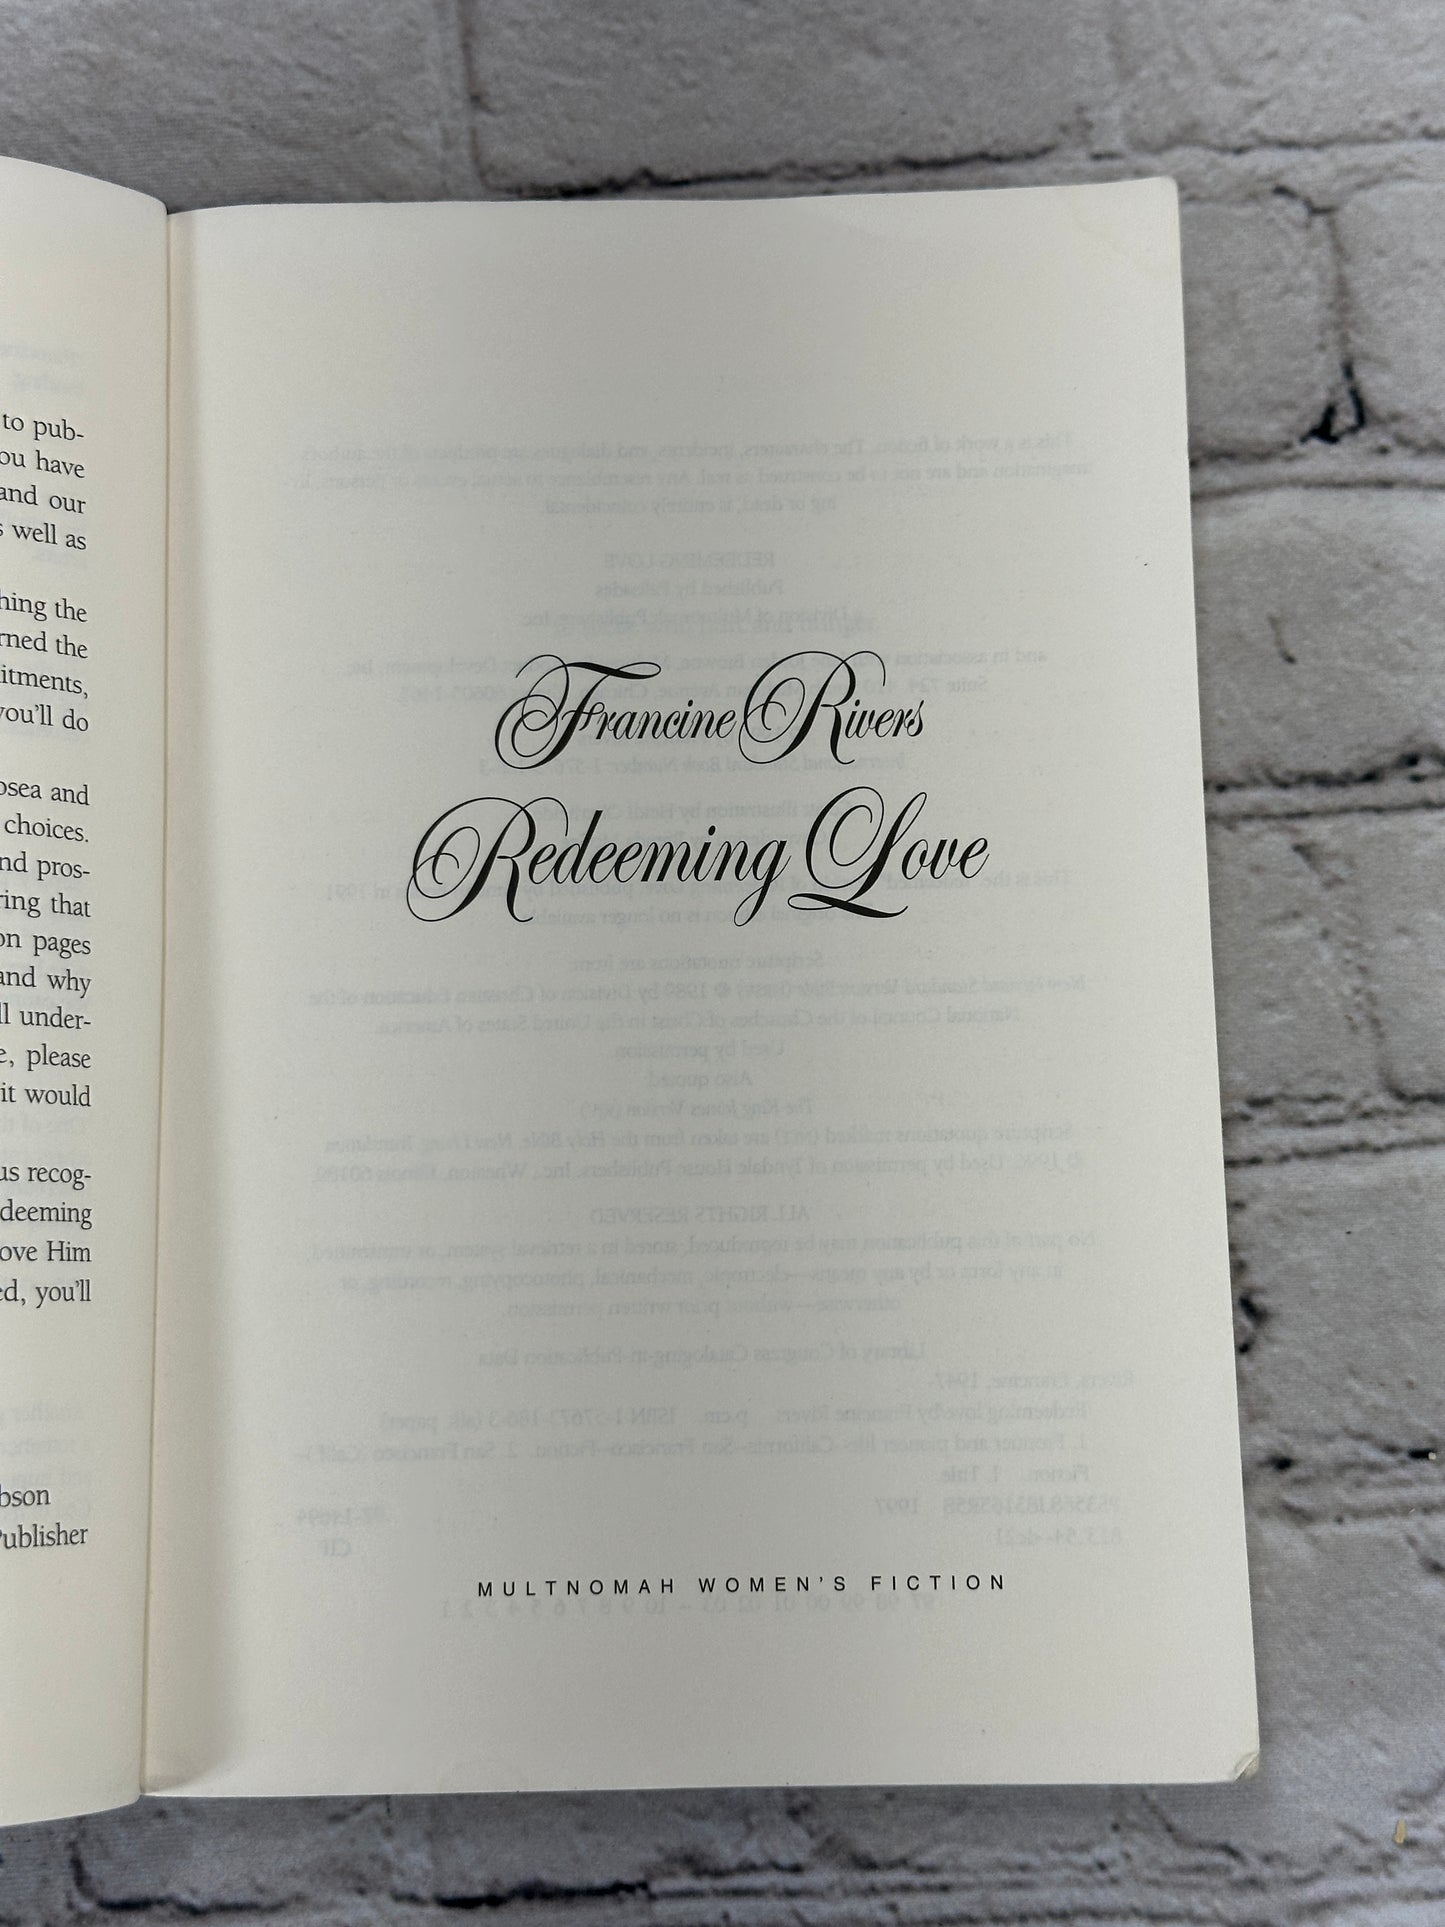 Redeeming Love by Francine Rivers [1997 · First Printing]